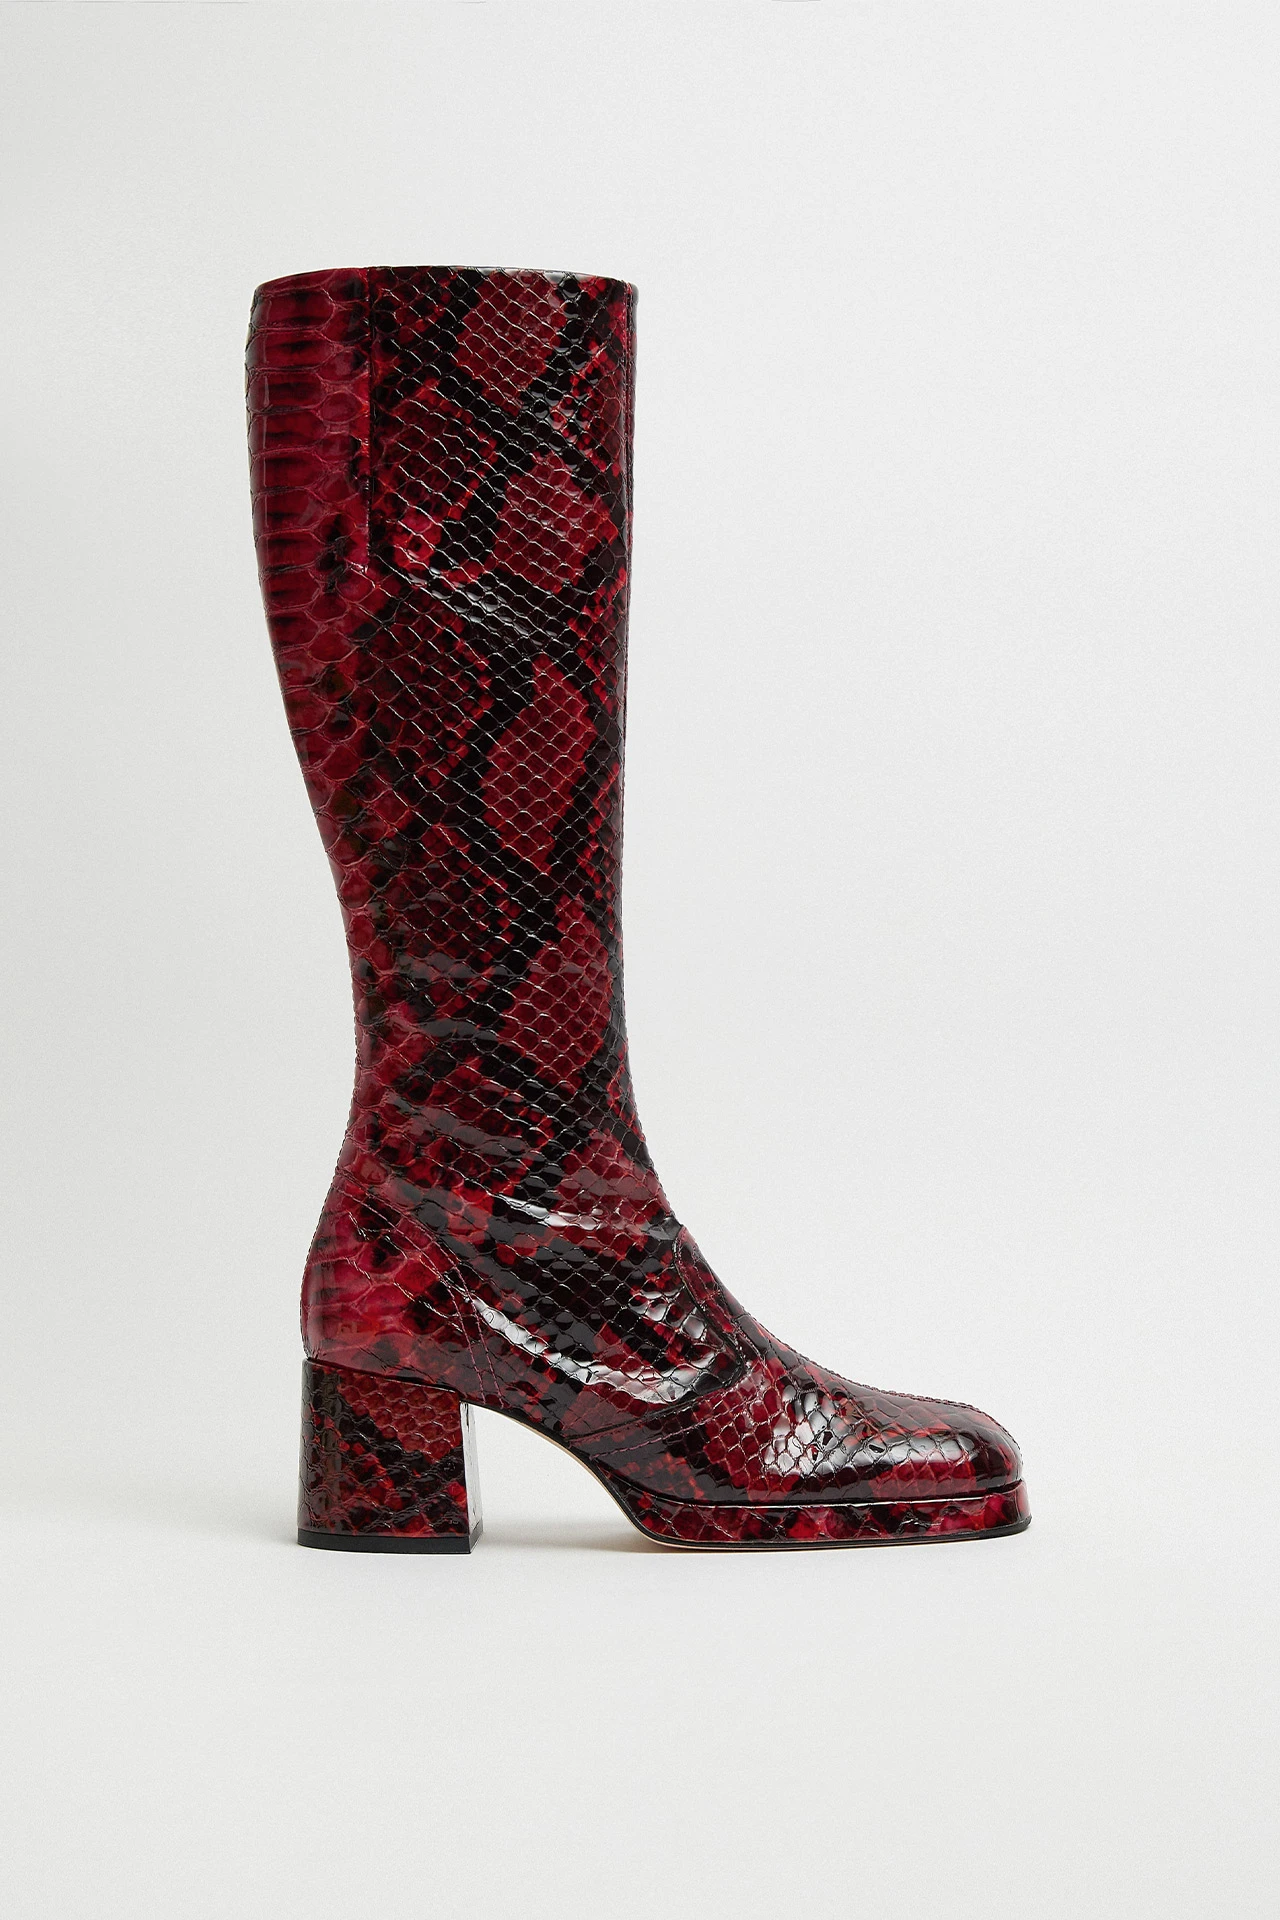 Miista-Donna-Red-Boots-01